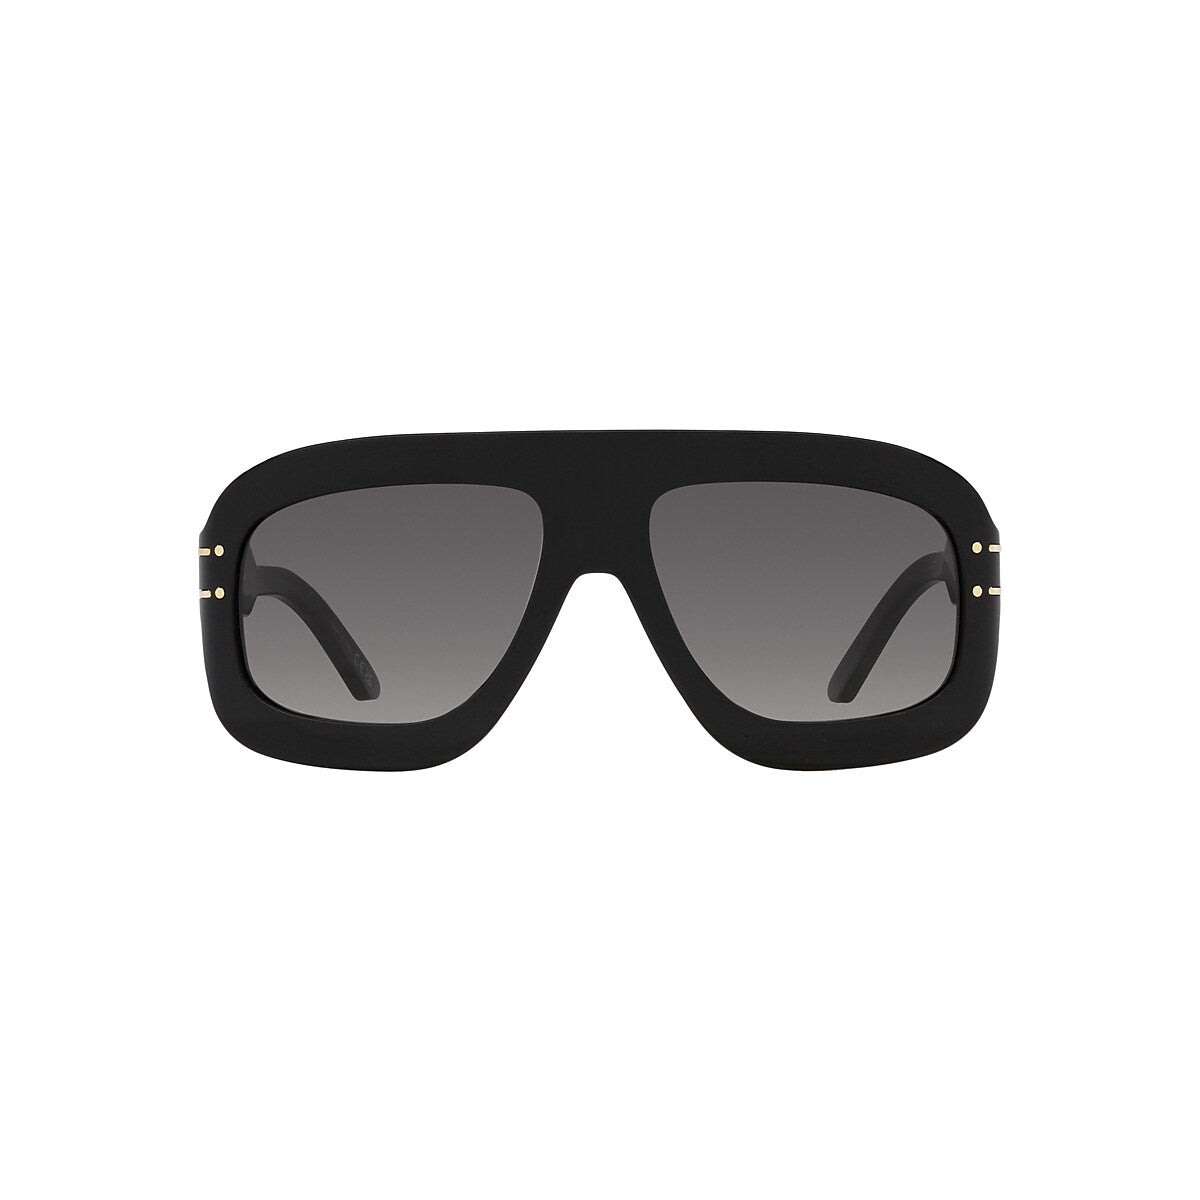 DIOR DiorSignaturem1U Black - Women Luxury Sunglasses, Smoke Lens